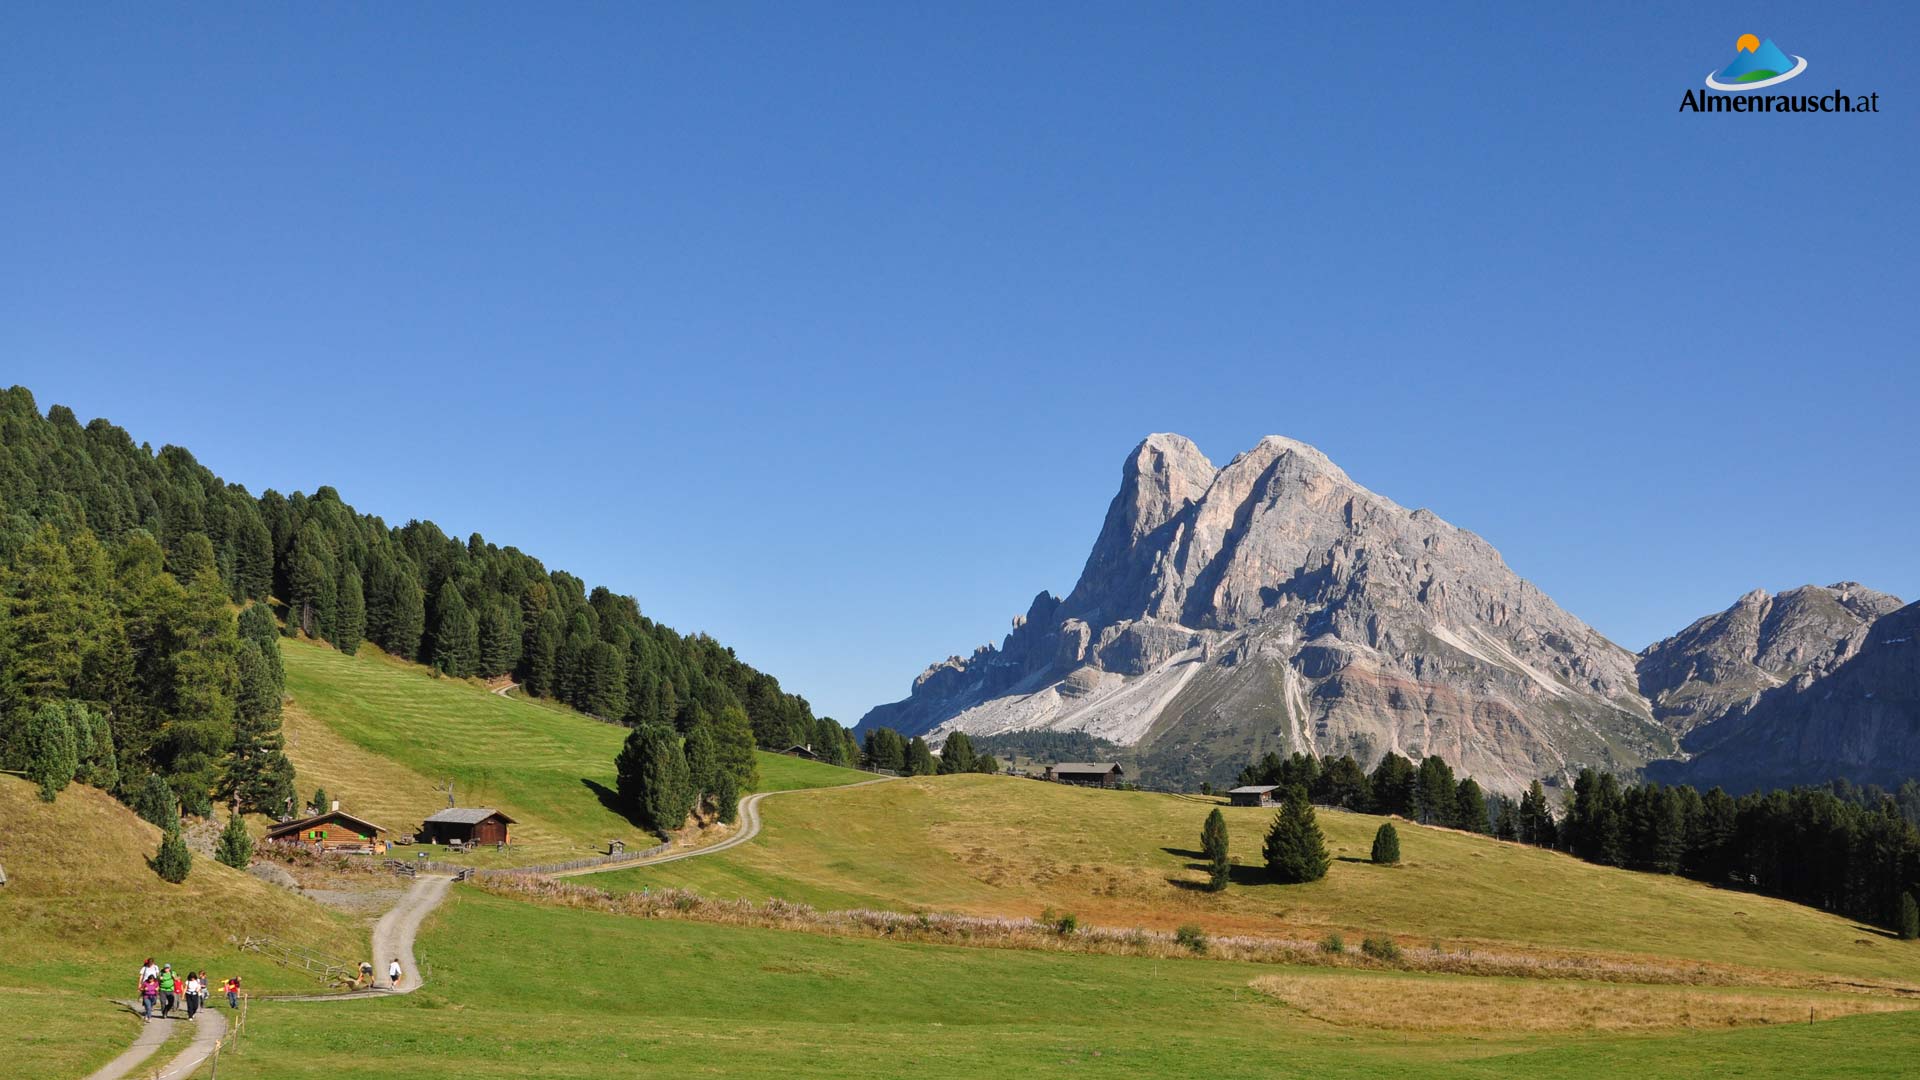  Alpen Hintergrundbild 1920x1080. Hintergrundbilder